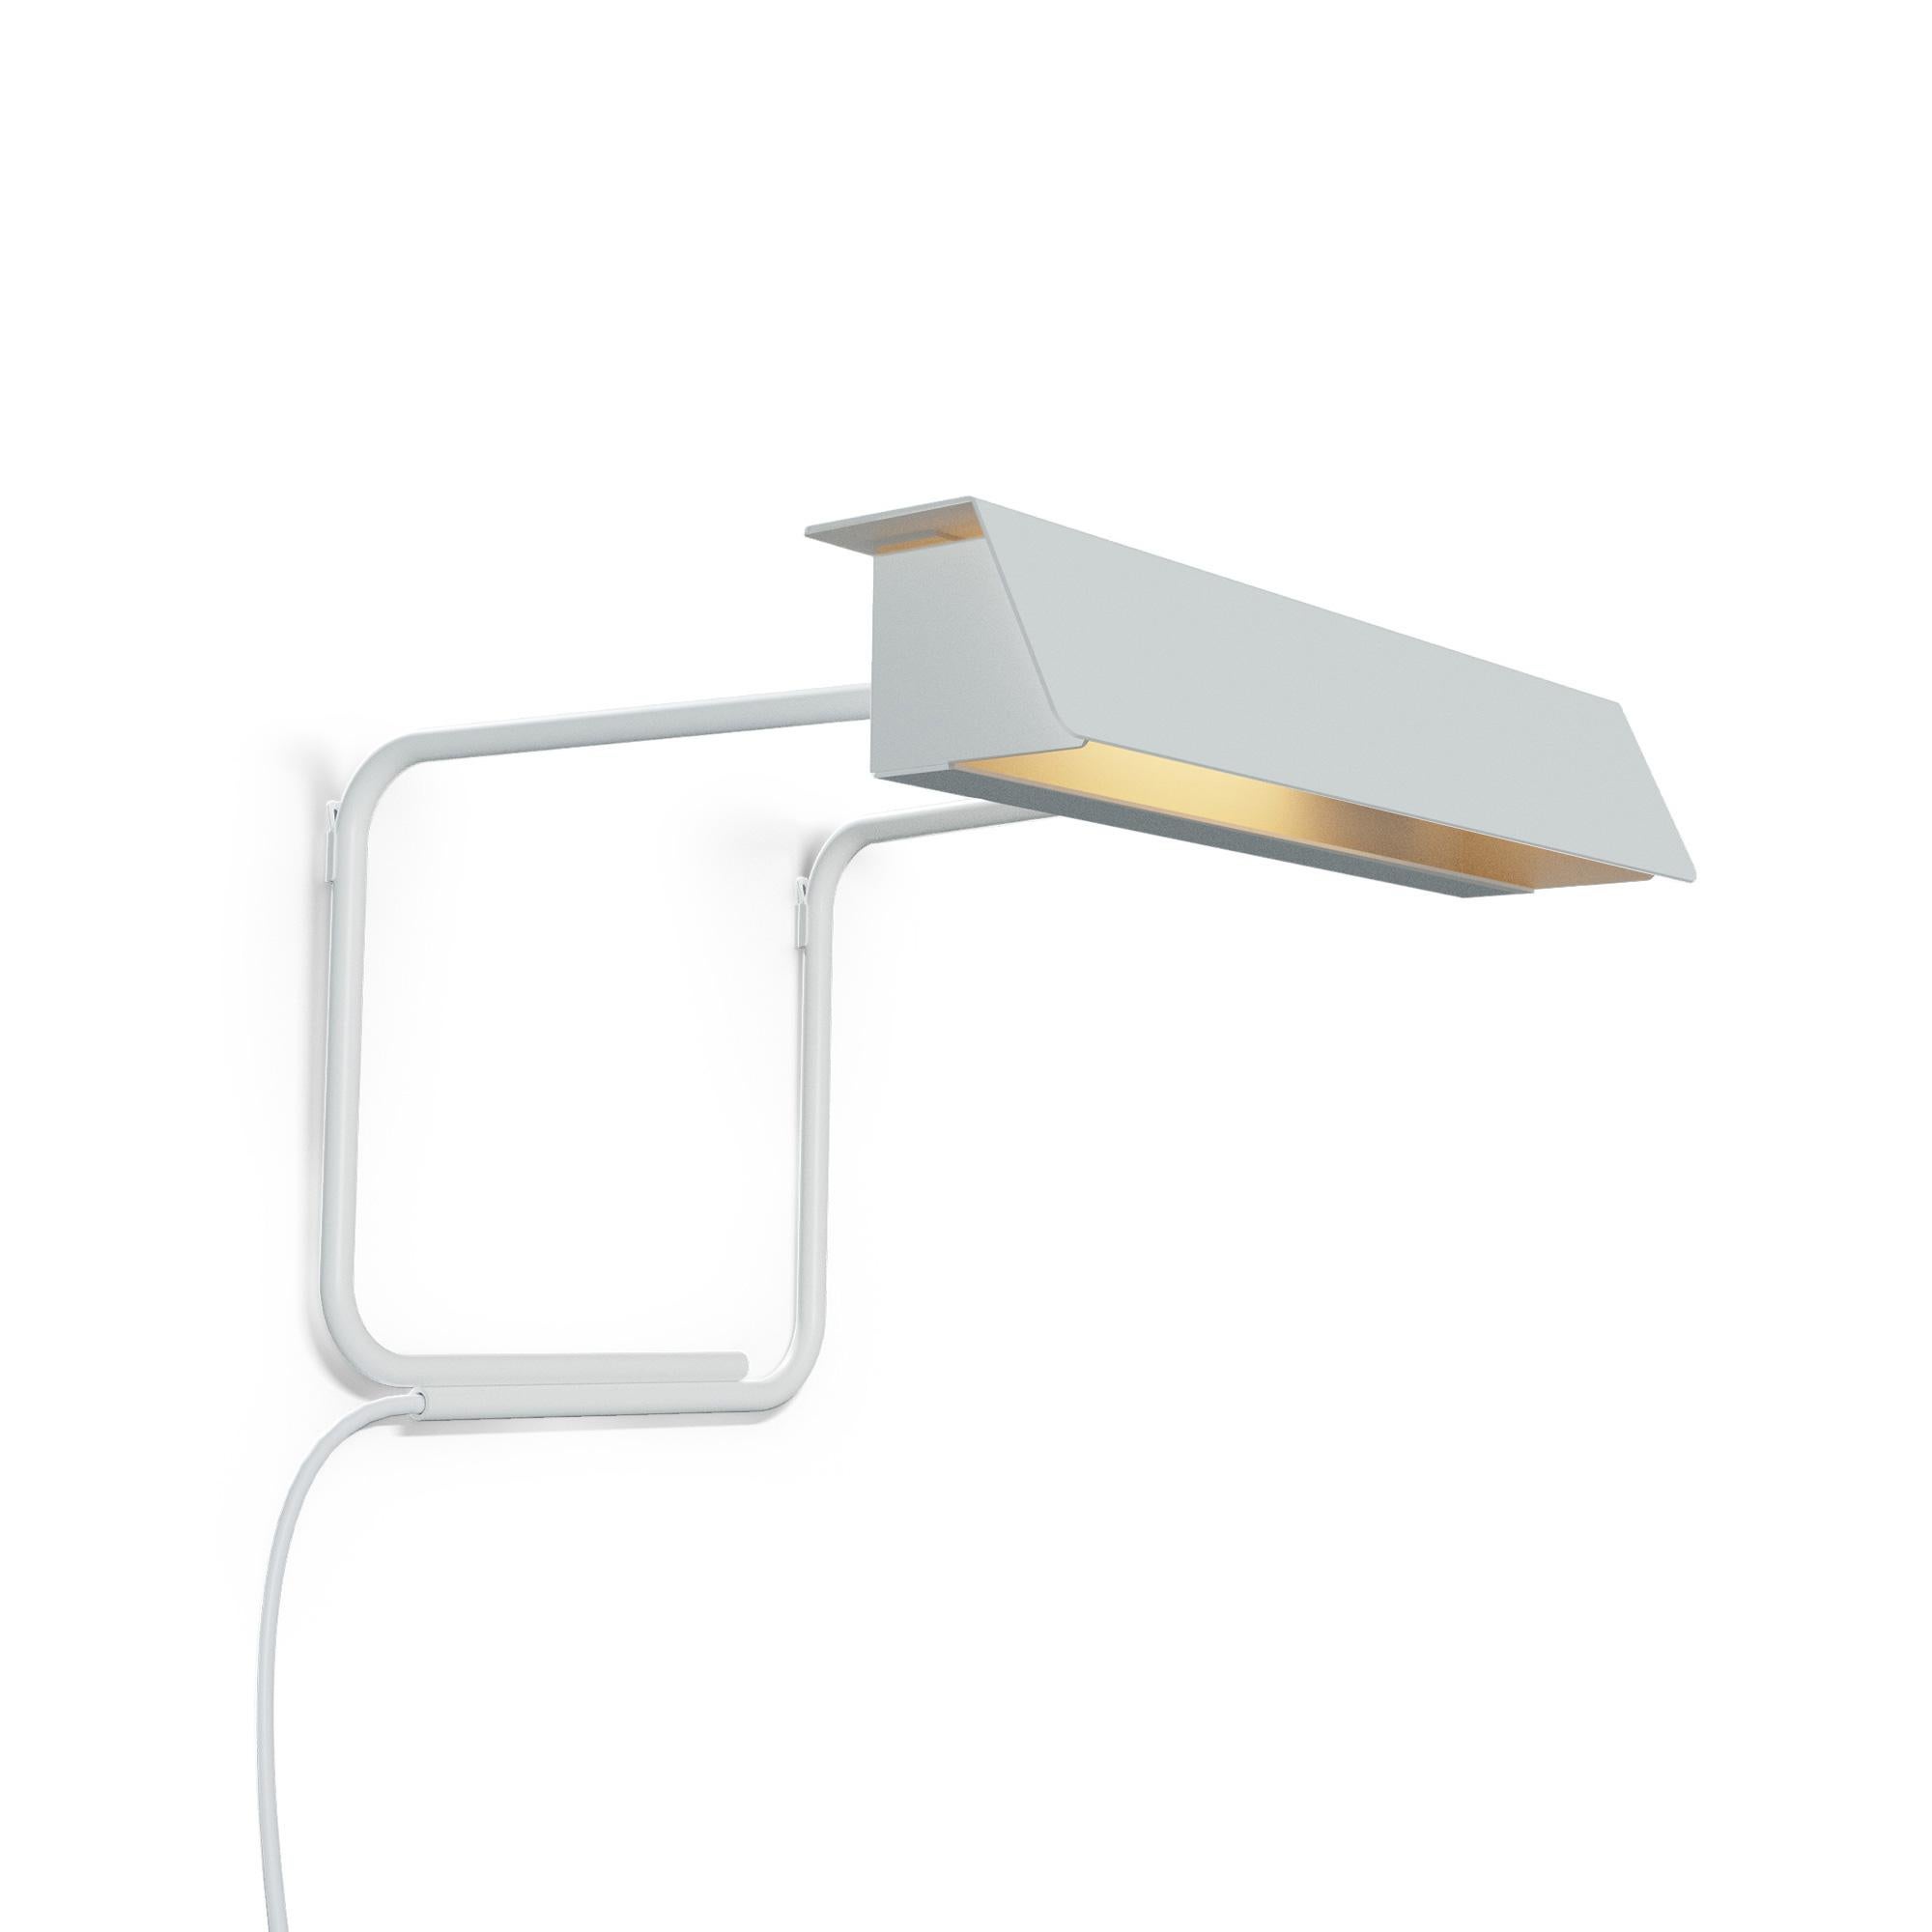 French Alain Richard Wall Lamp 5980 in White for Disderot For Sale